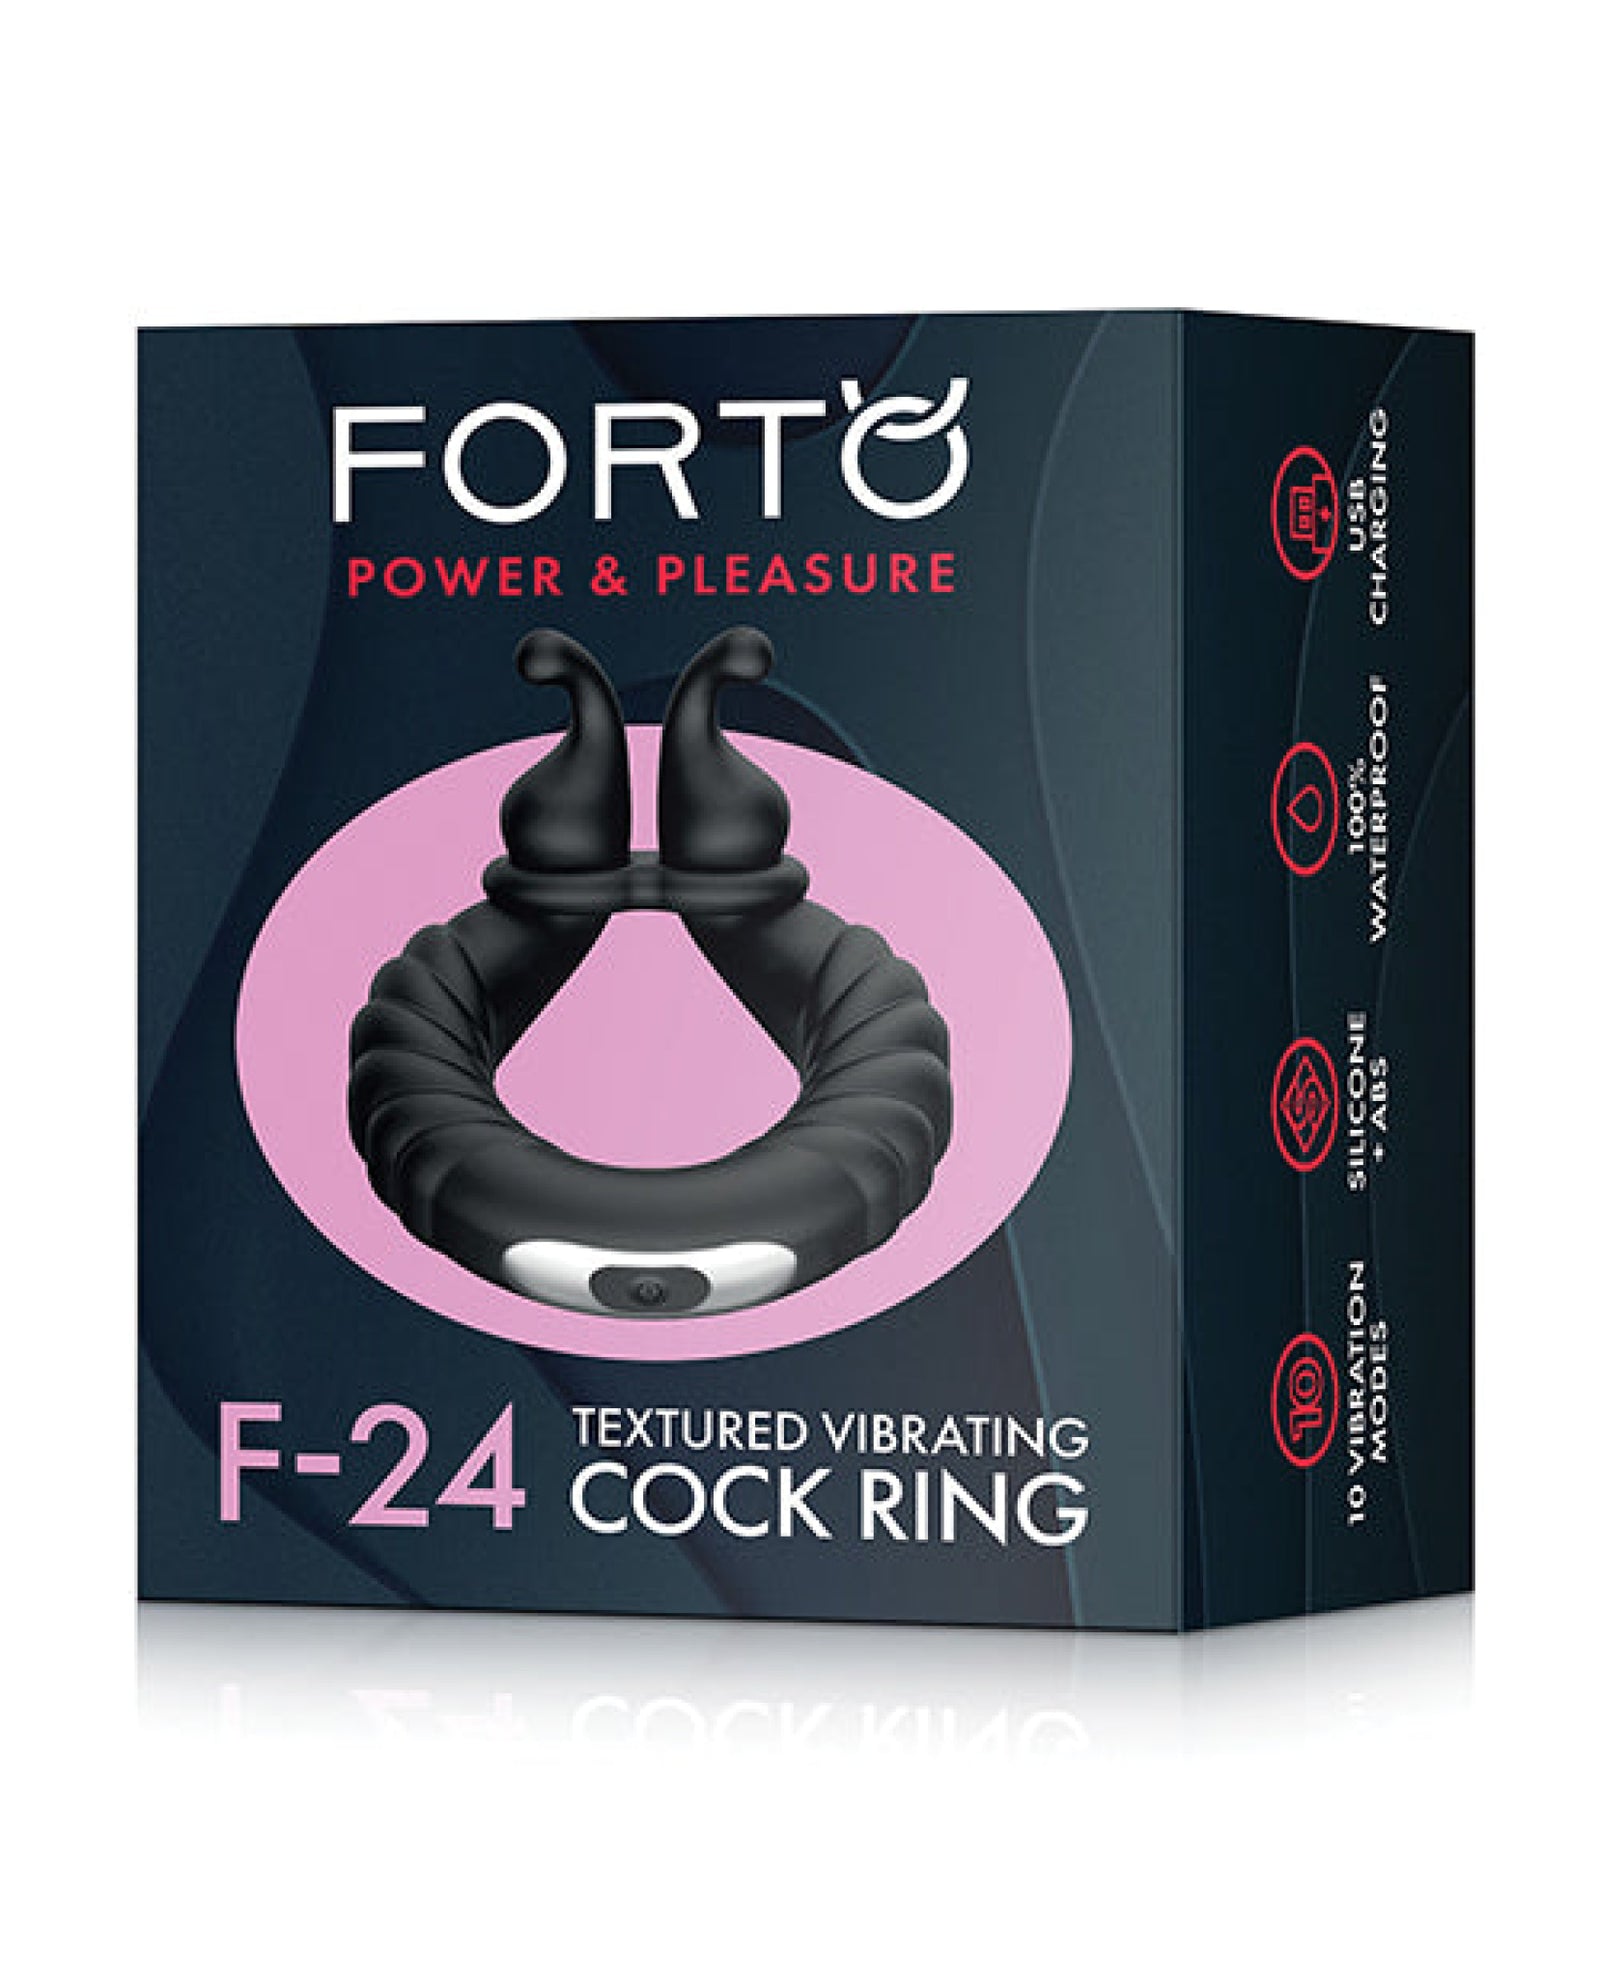 Forto F-24 Textured Vibrating Cock Ring Forto